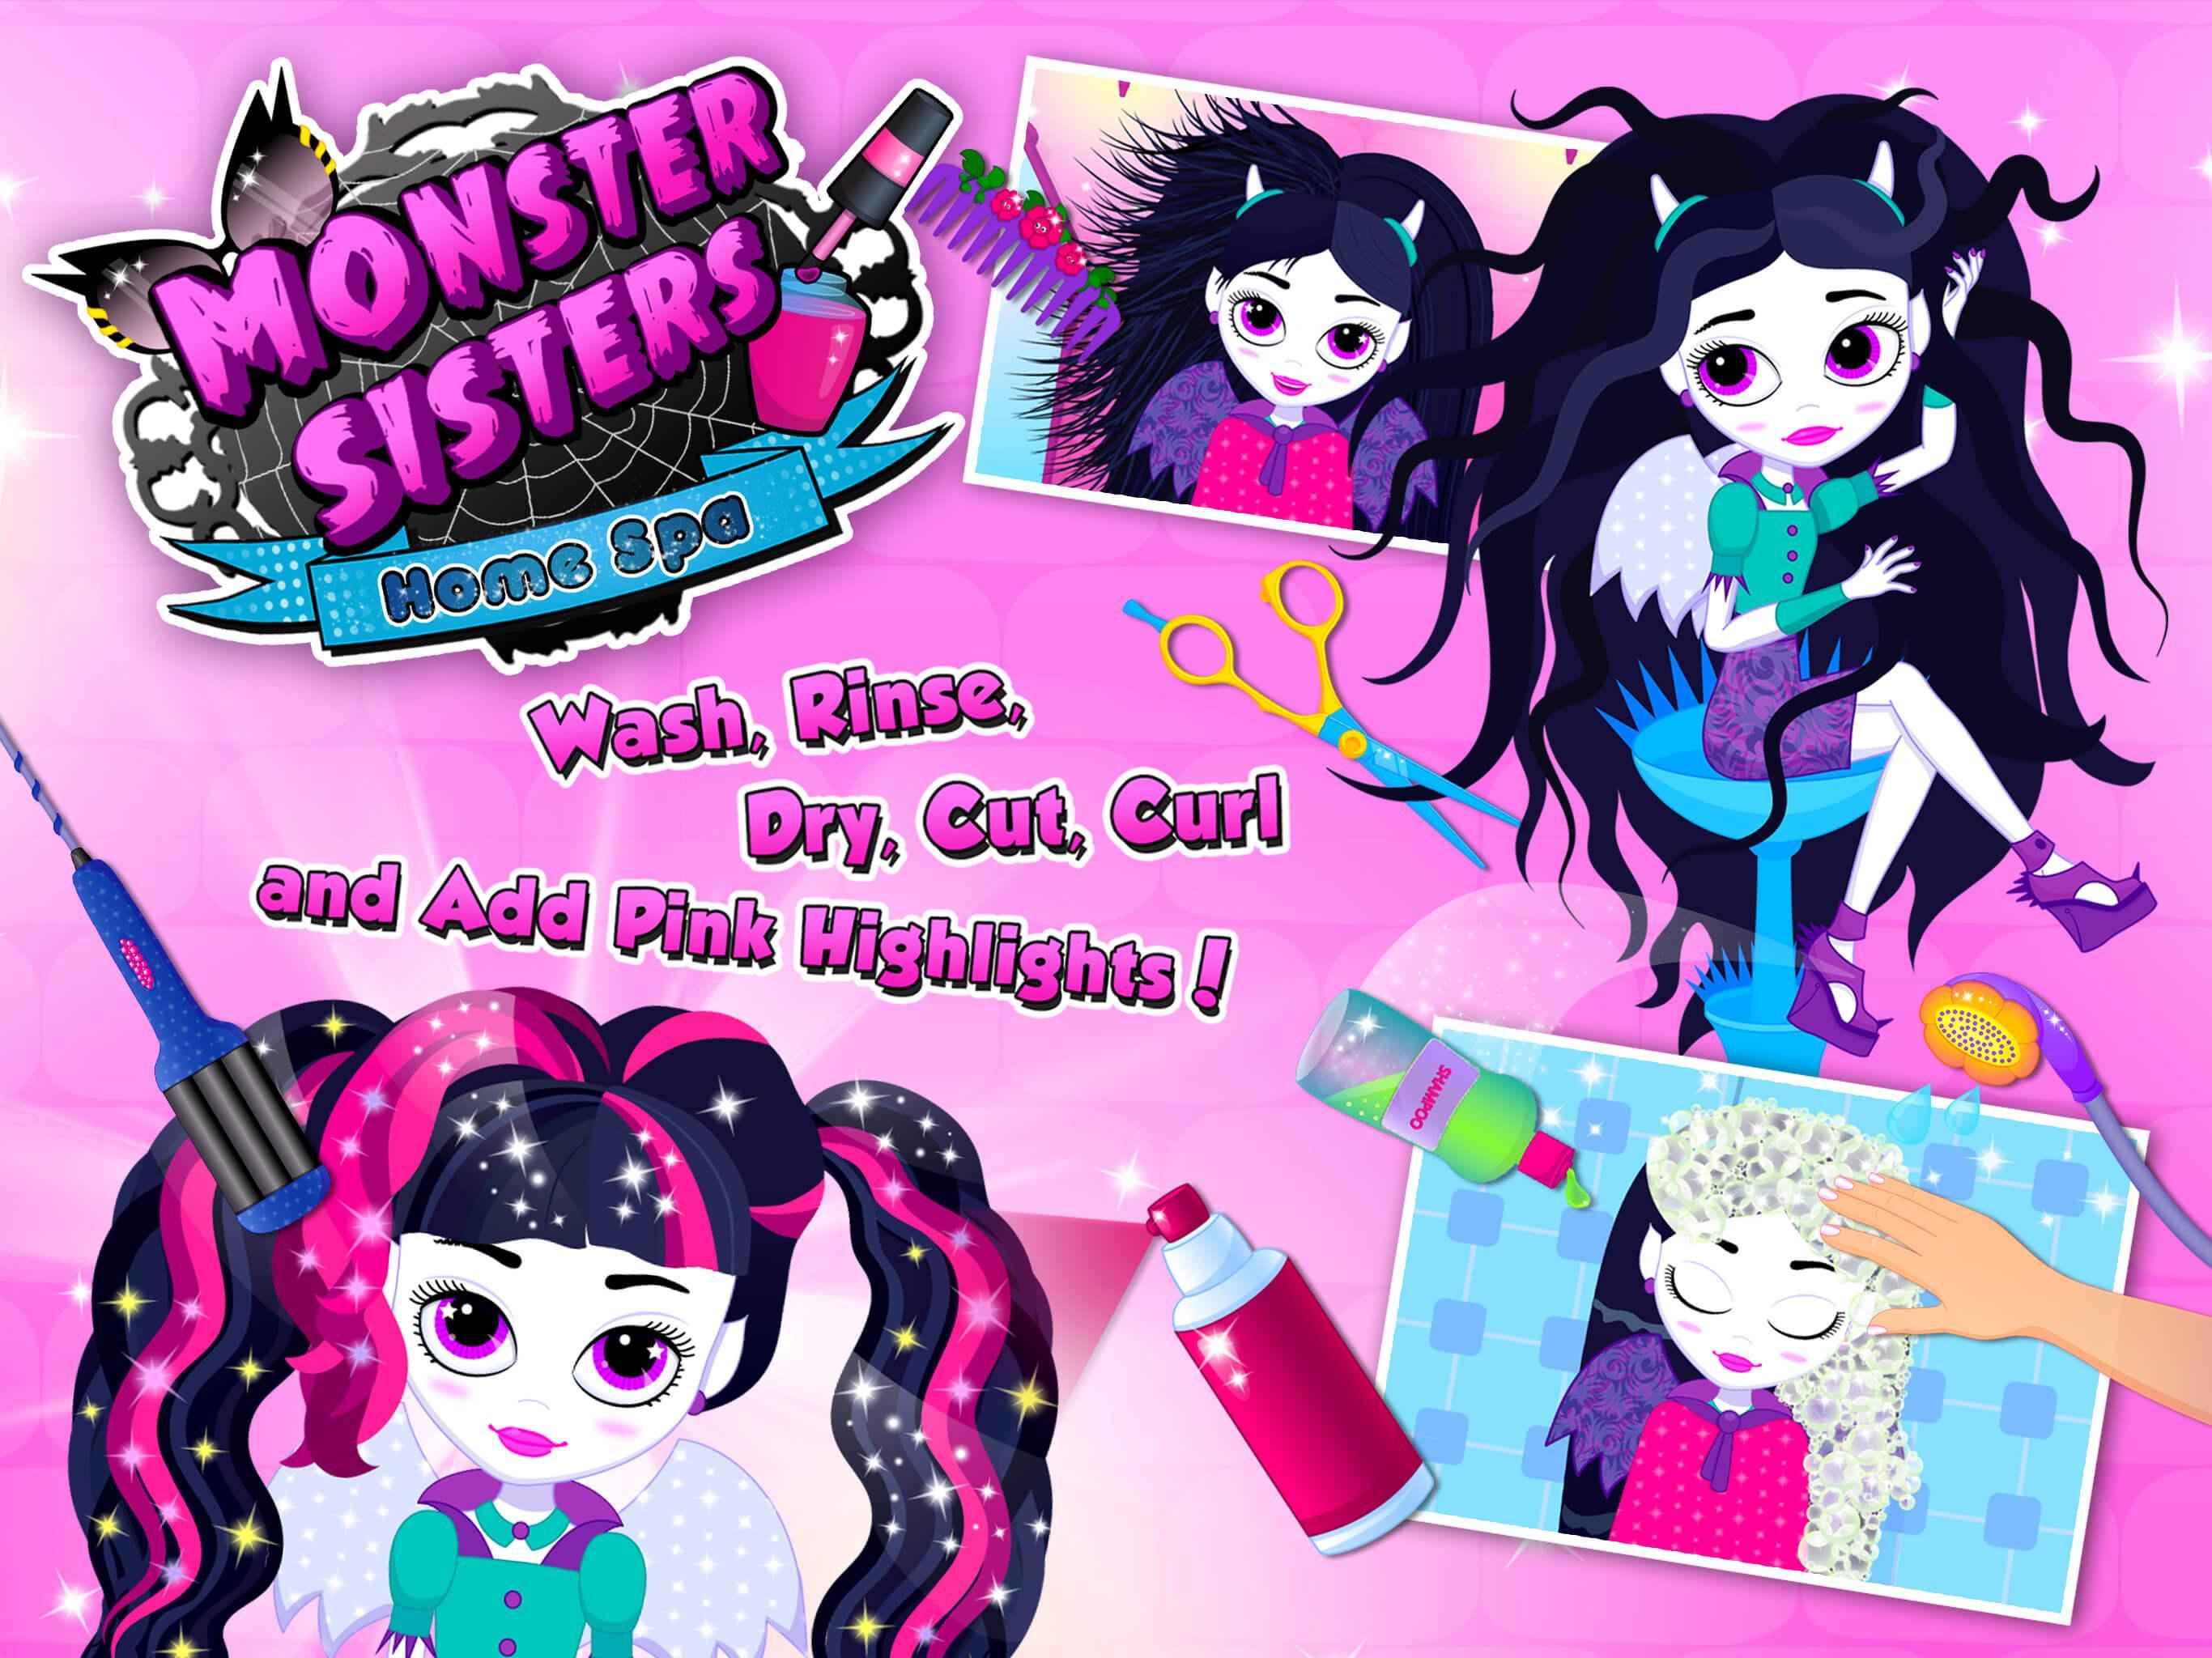 Monster Sisters 2 Home Spa screenshot game